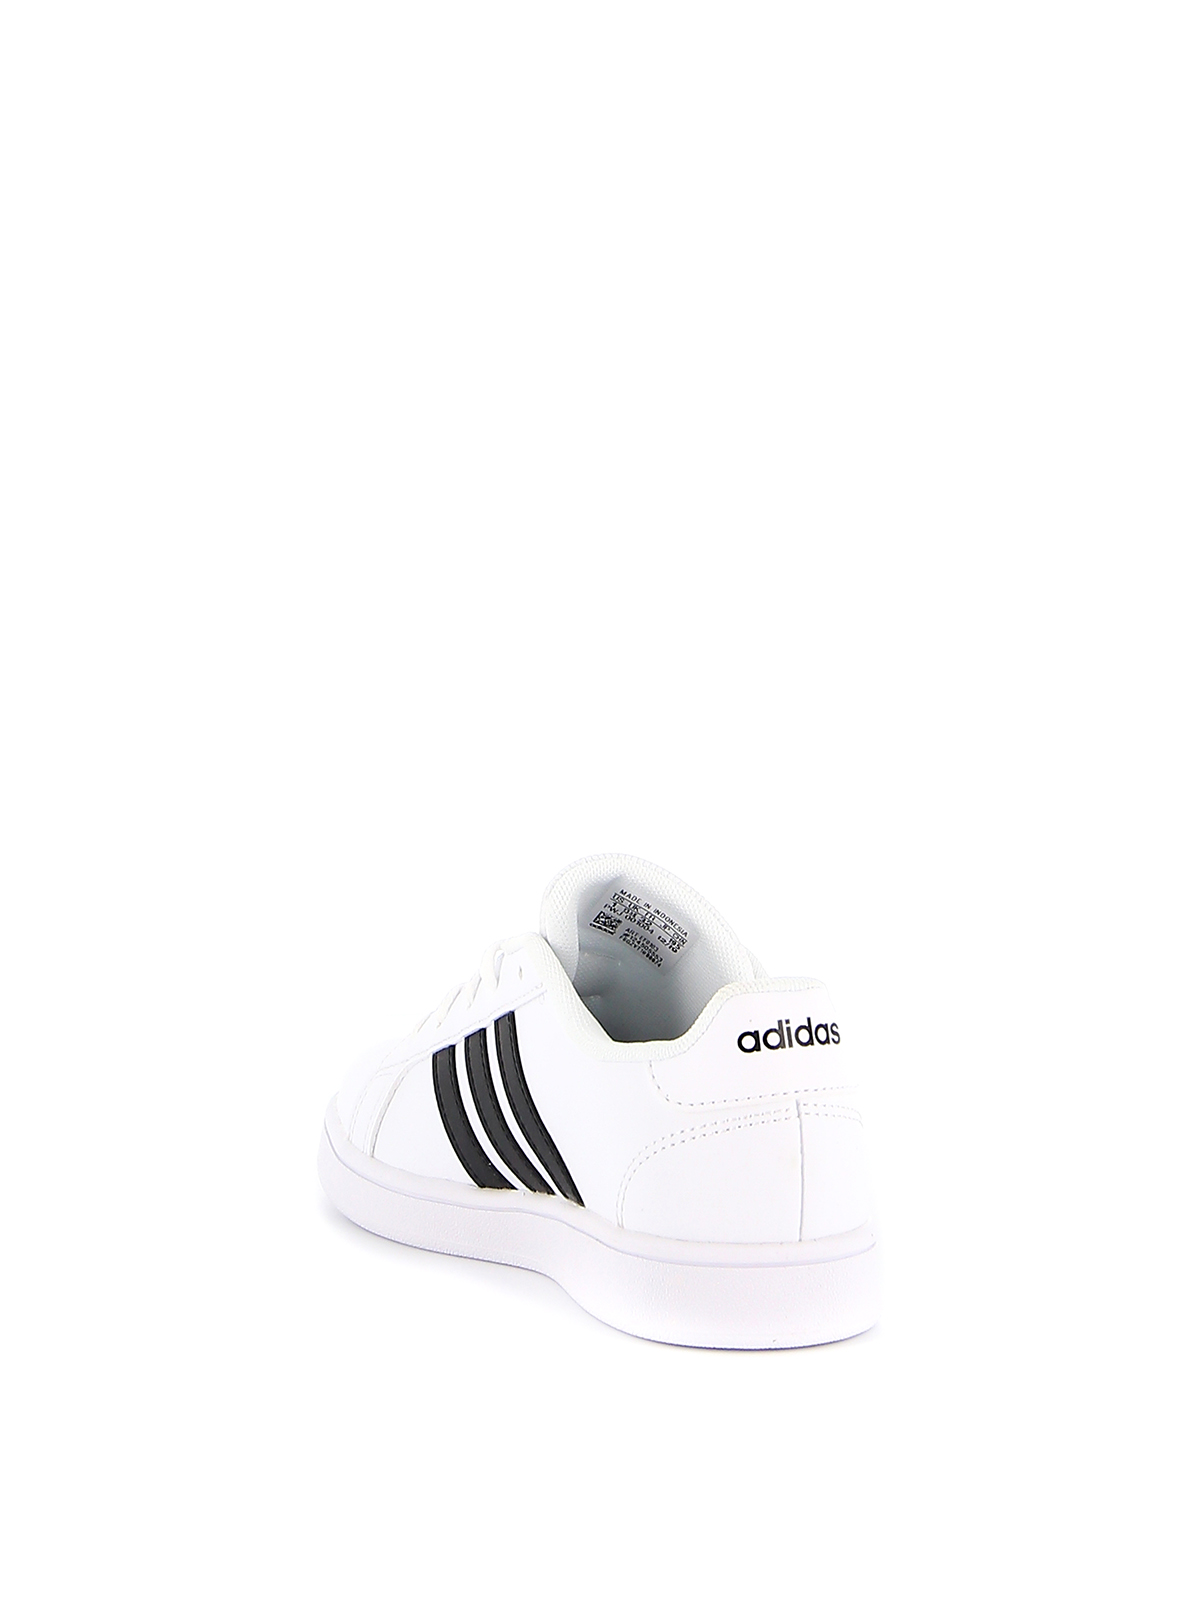 adidas sneakers white with black stripes